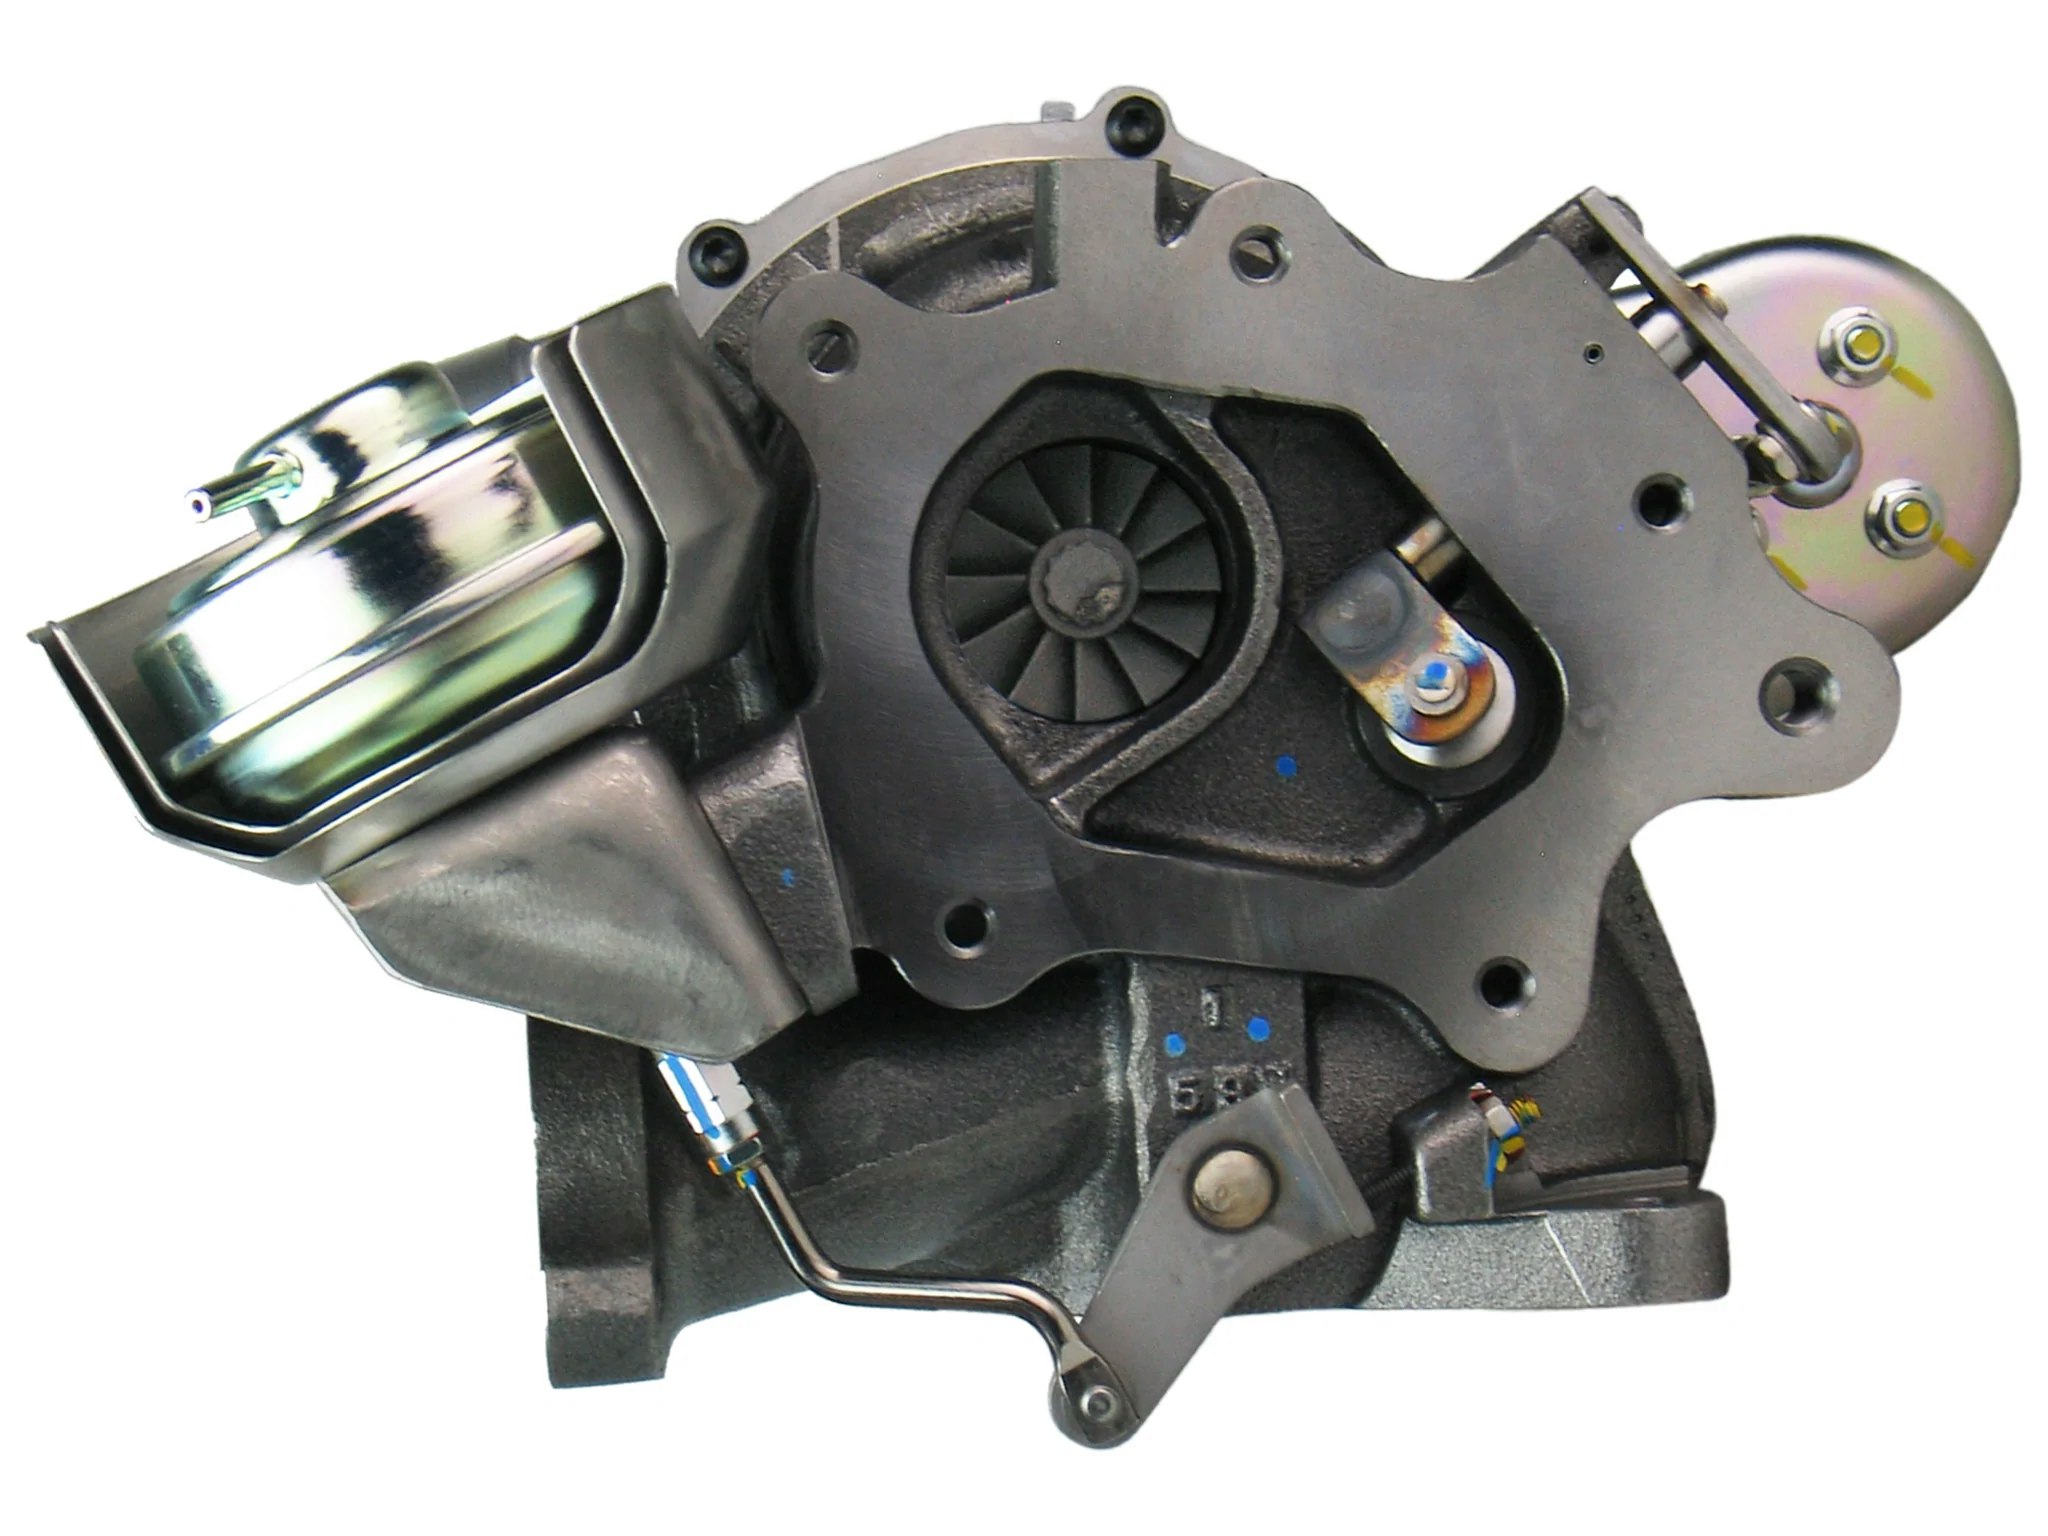 VIHM IHI ISUZU D-Max Fabriksny original turbo OEM : 8981506883 Motor : 4JK1  ( Storsäljare )